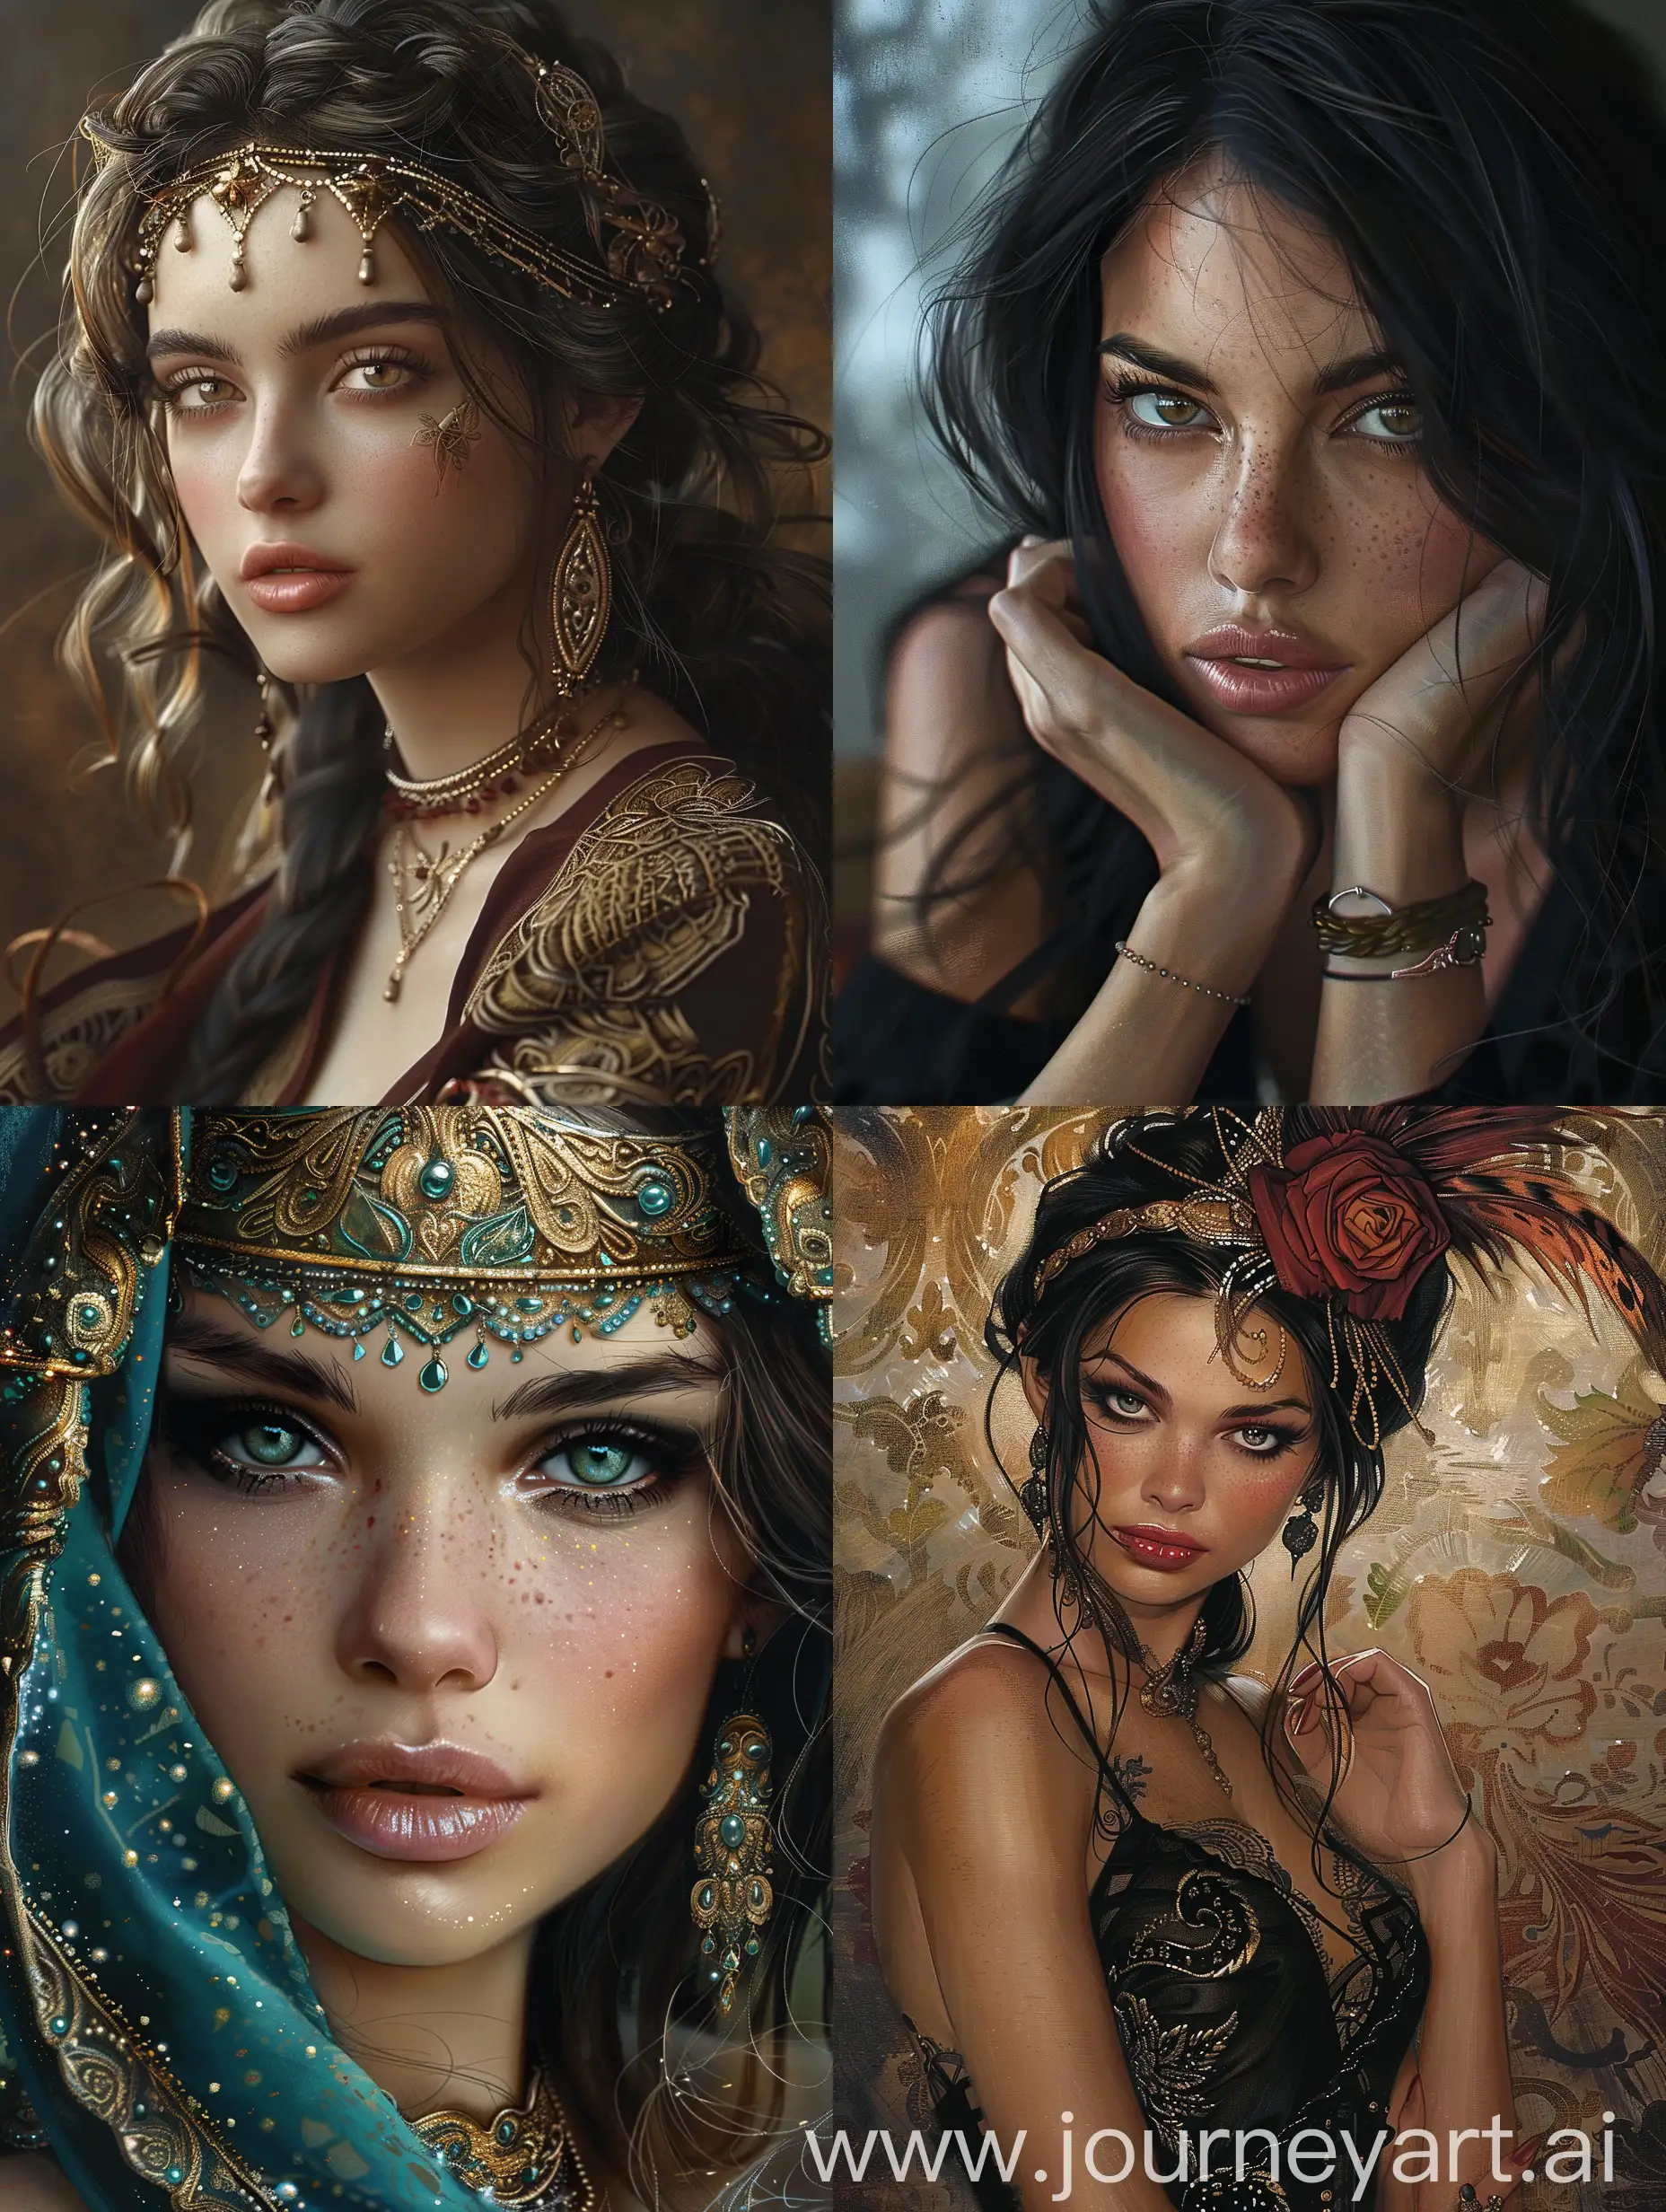 Stunning-Women-in-Vibrant-Attire-A-Captivating-Portrait